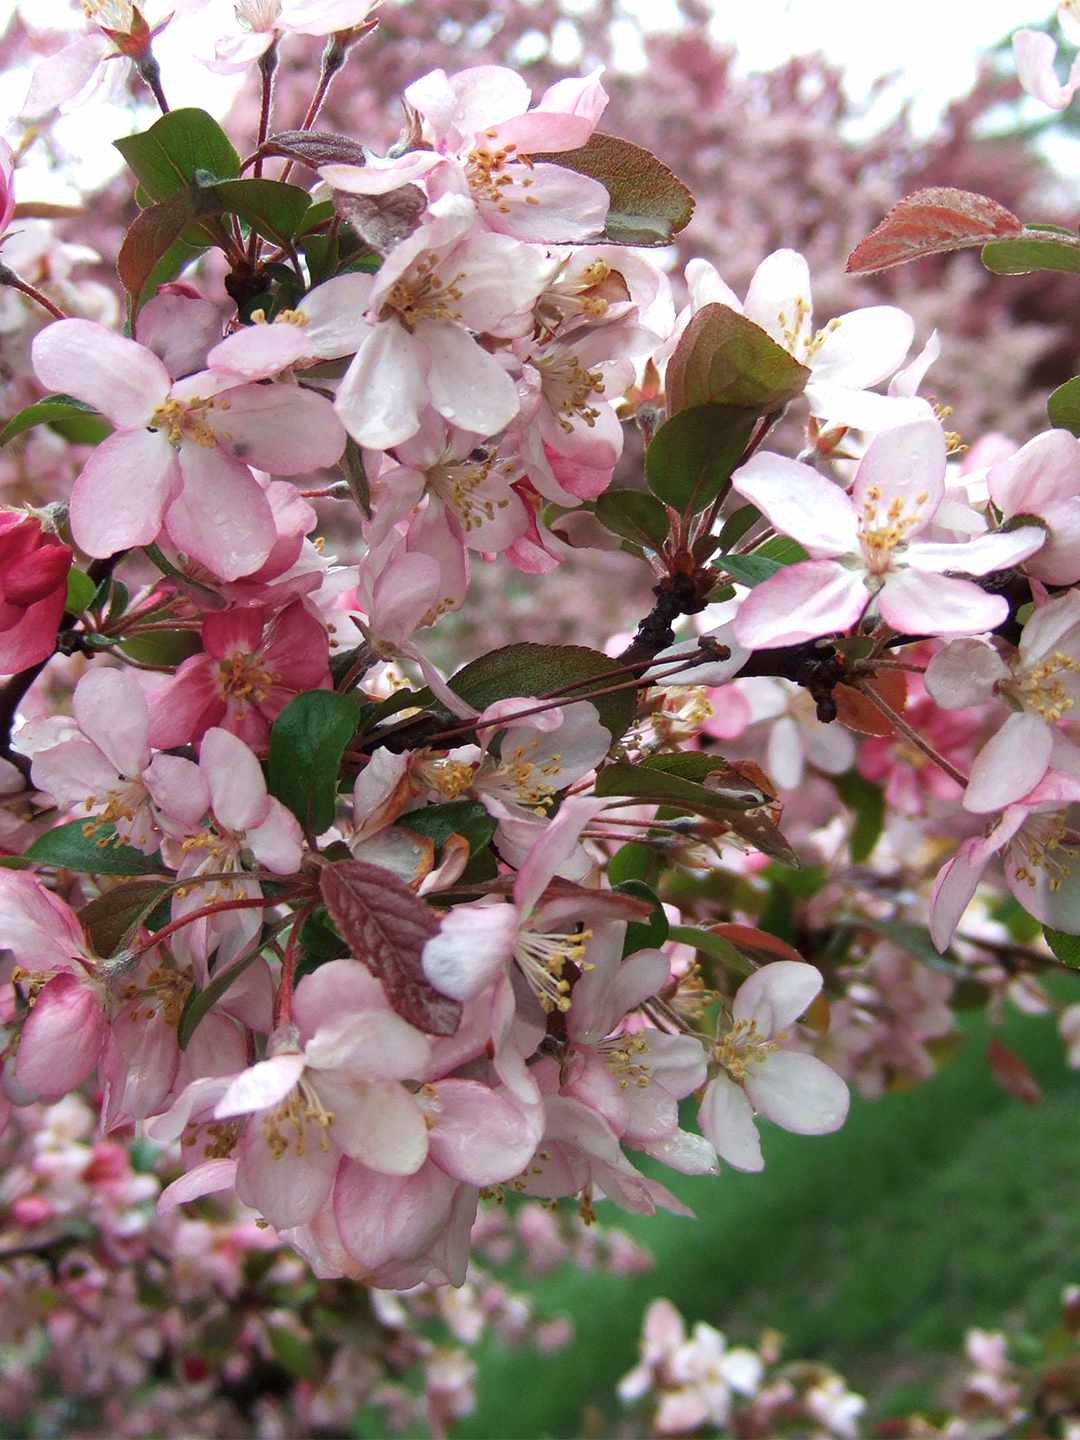 crabapple robinson crabapples trees yard blooms pink shrubs